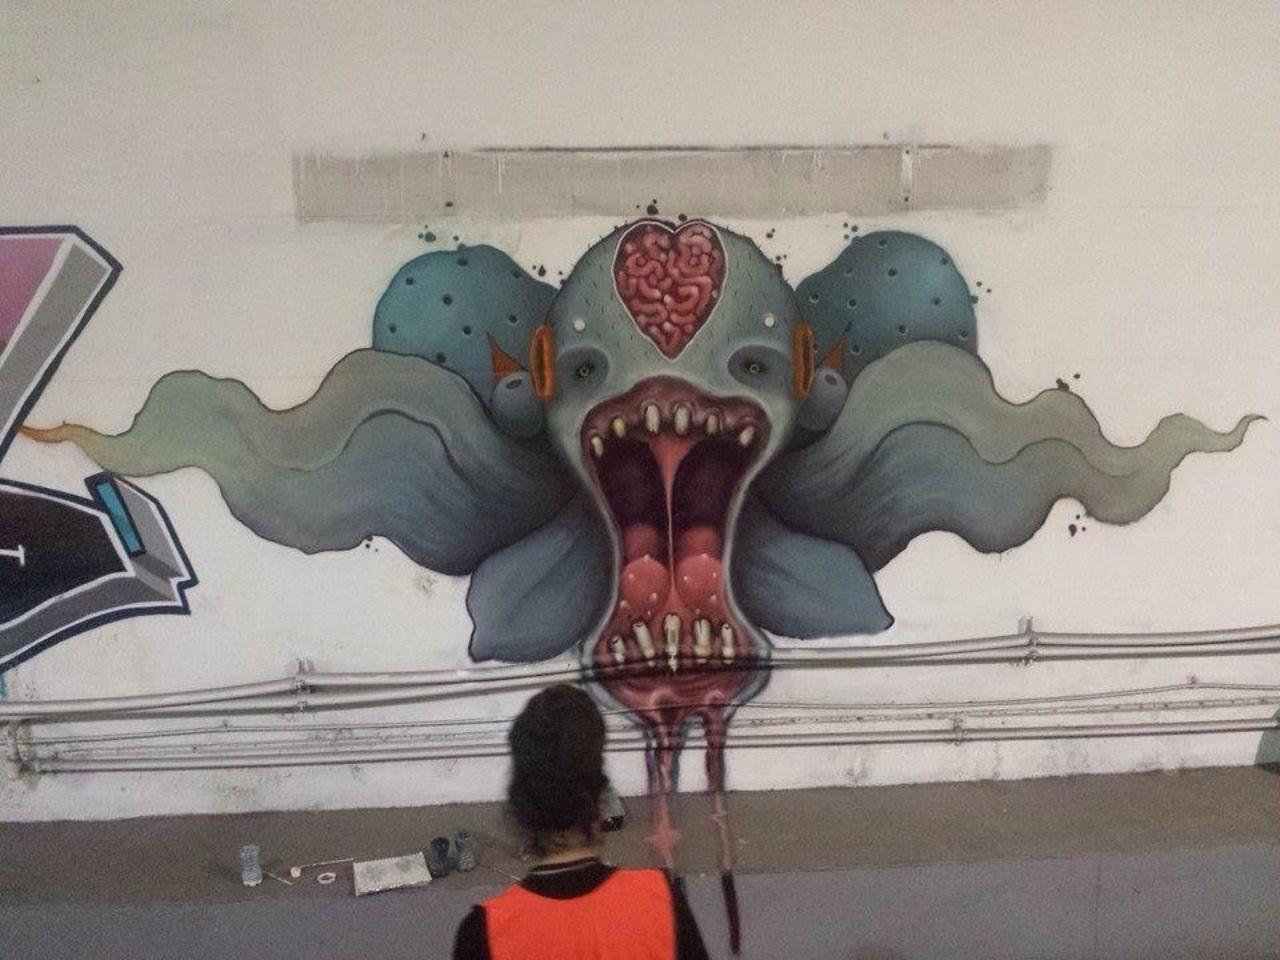 DONE en el #MOSMTY2014 #Monterrey #mty #Graffiti #graff #artist #artista #style #art http://t.co/ZfcNabTa4j